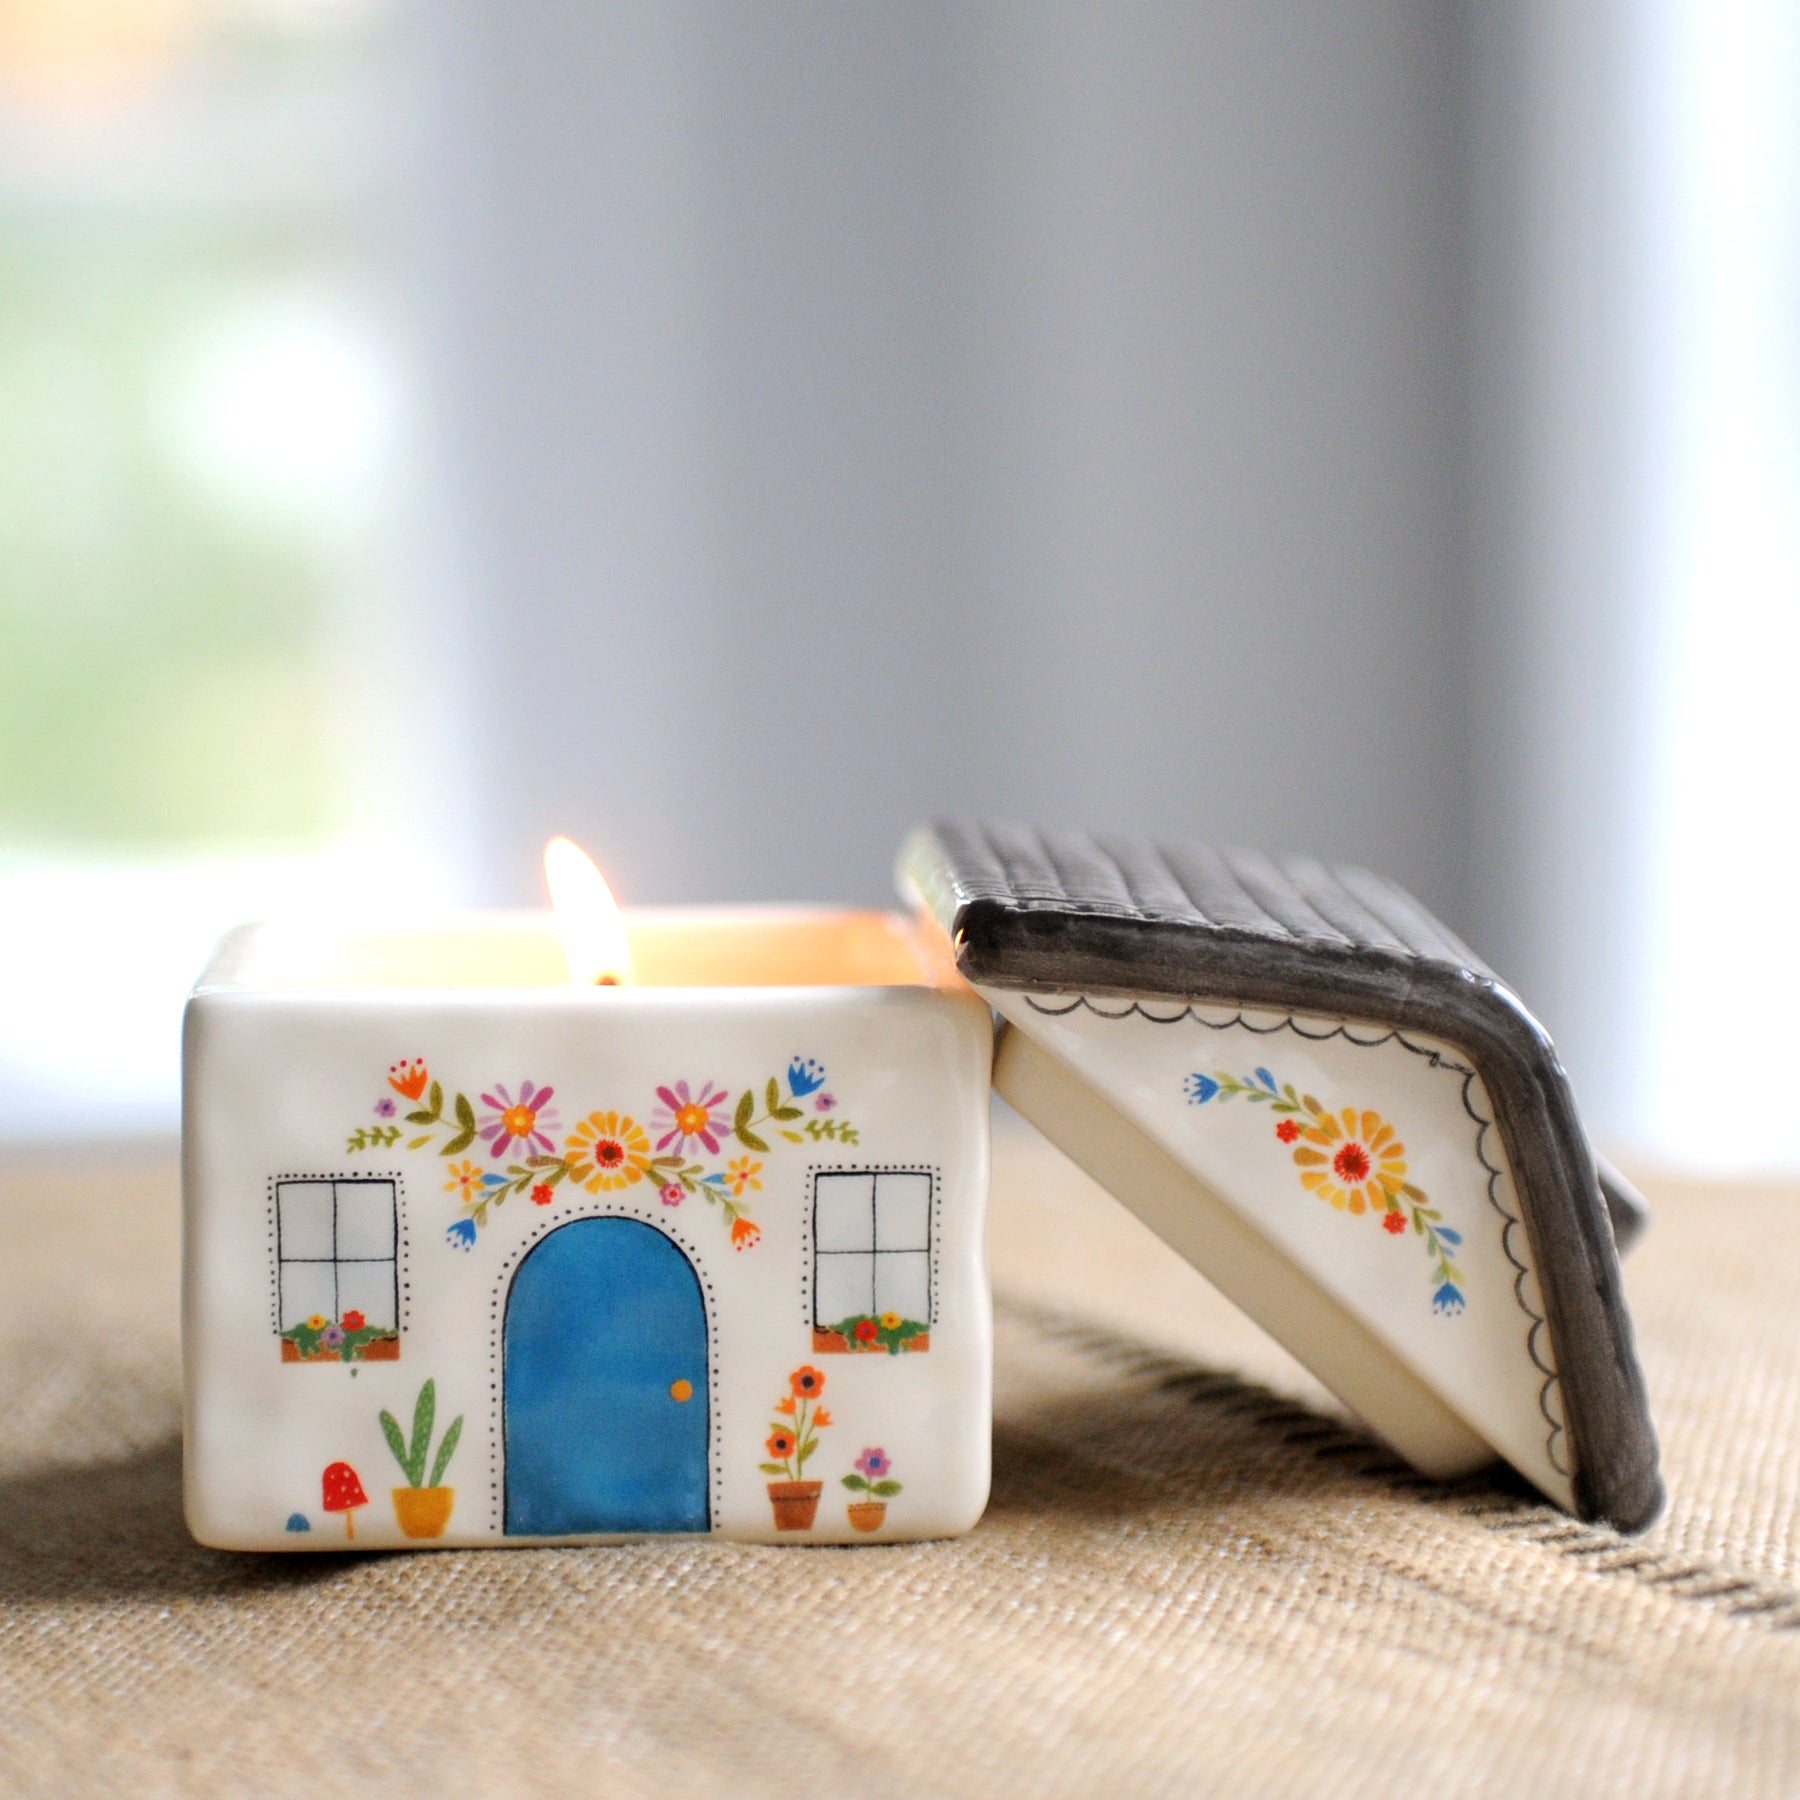 Trinket Box Candle: Home Sweet Home